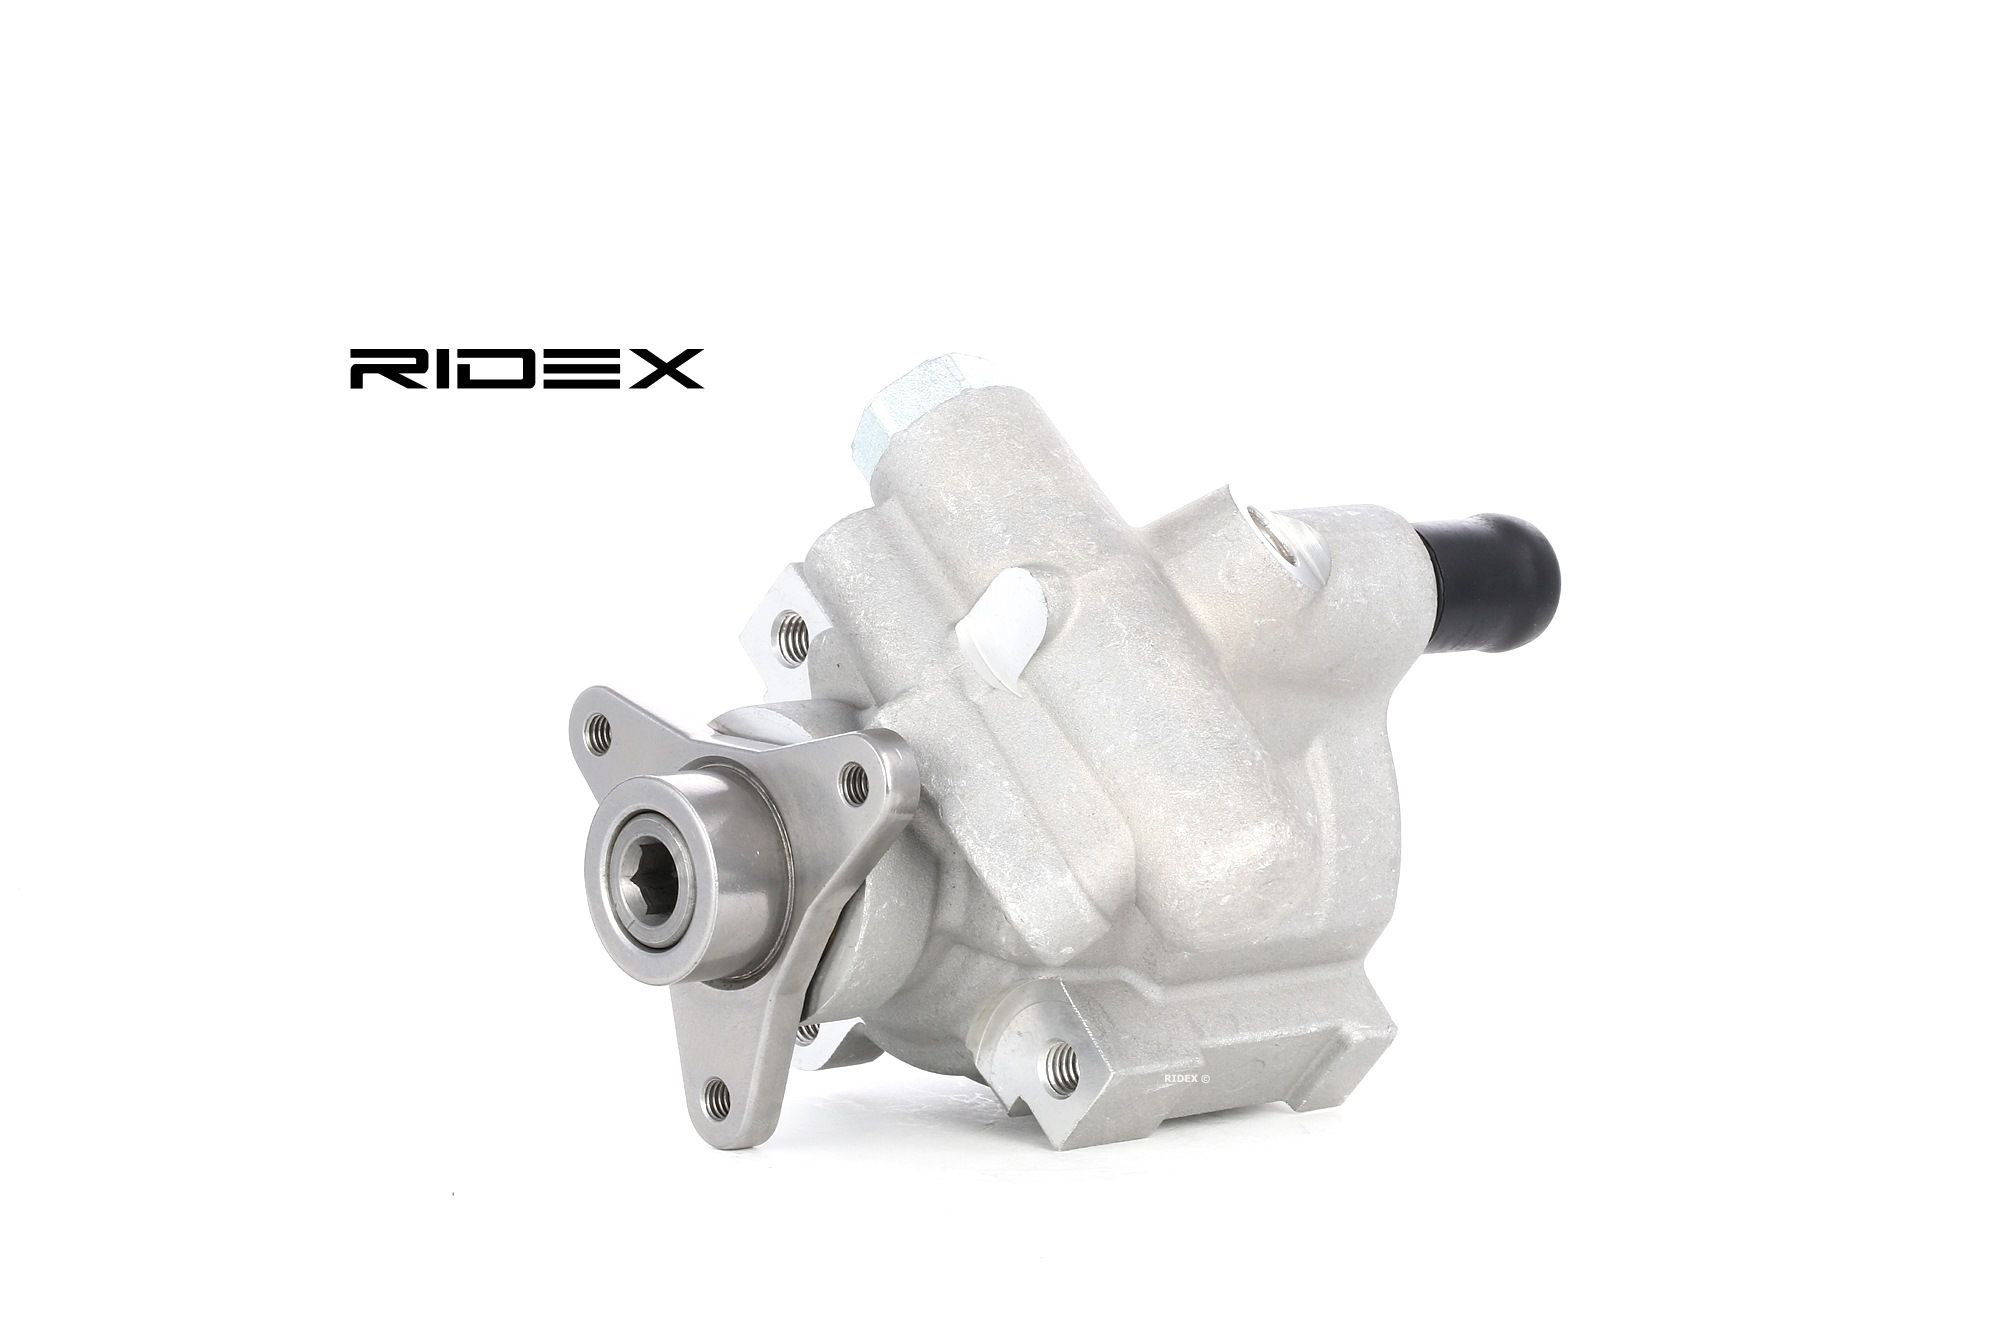 RIDEX 12H0052 Pompa servosterzo idraulico